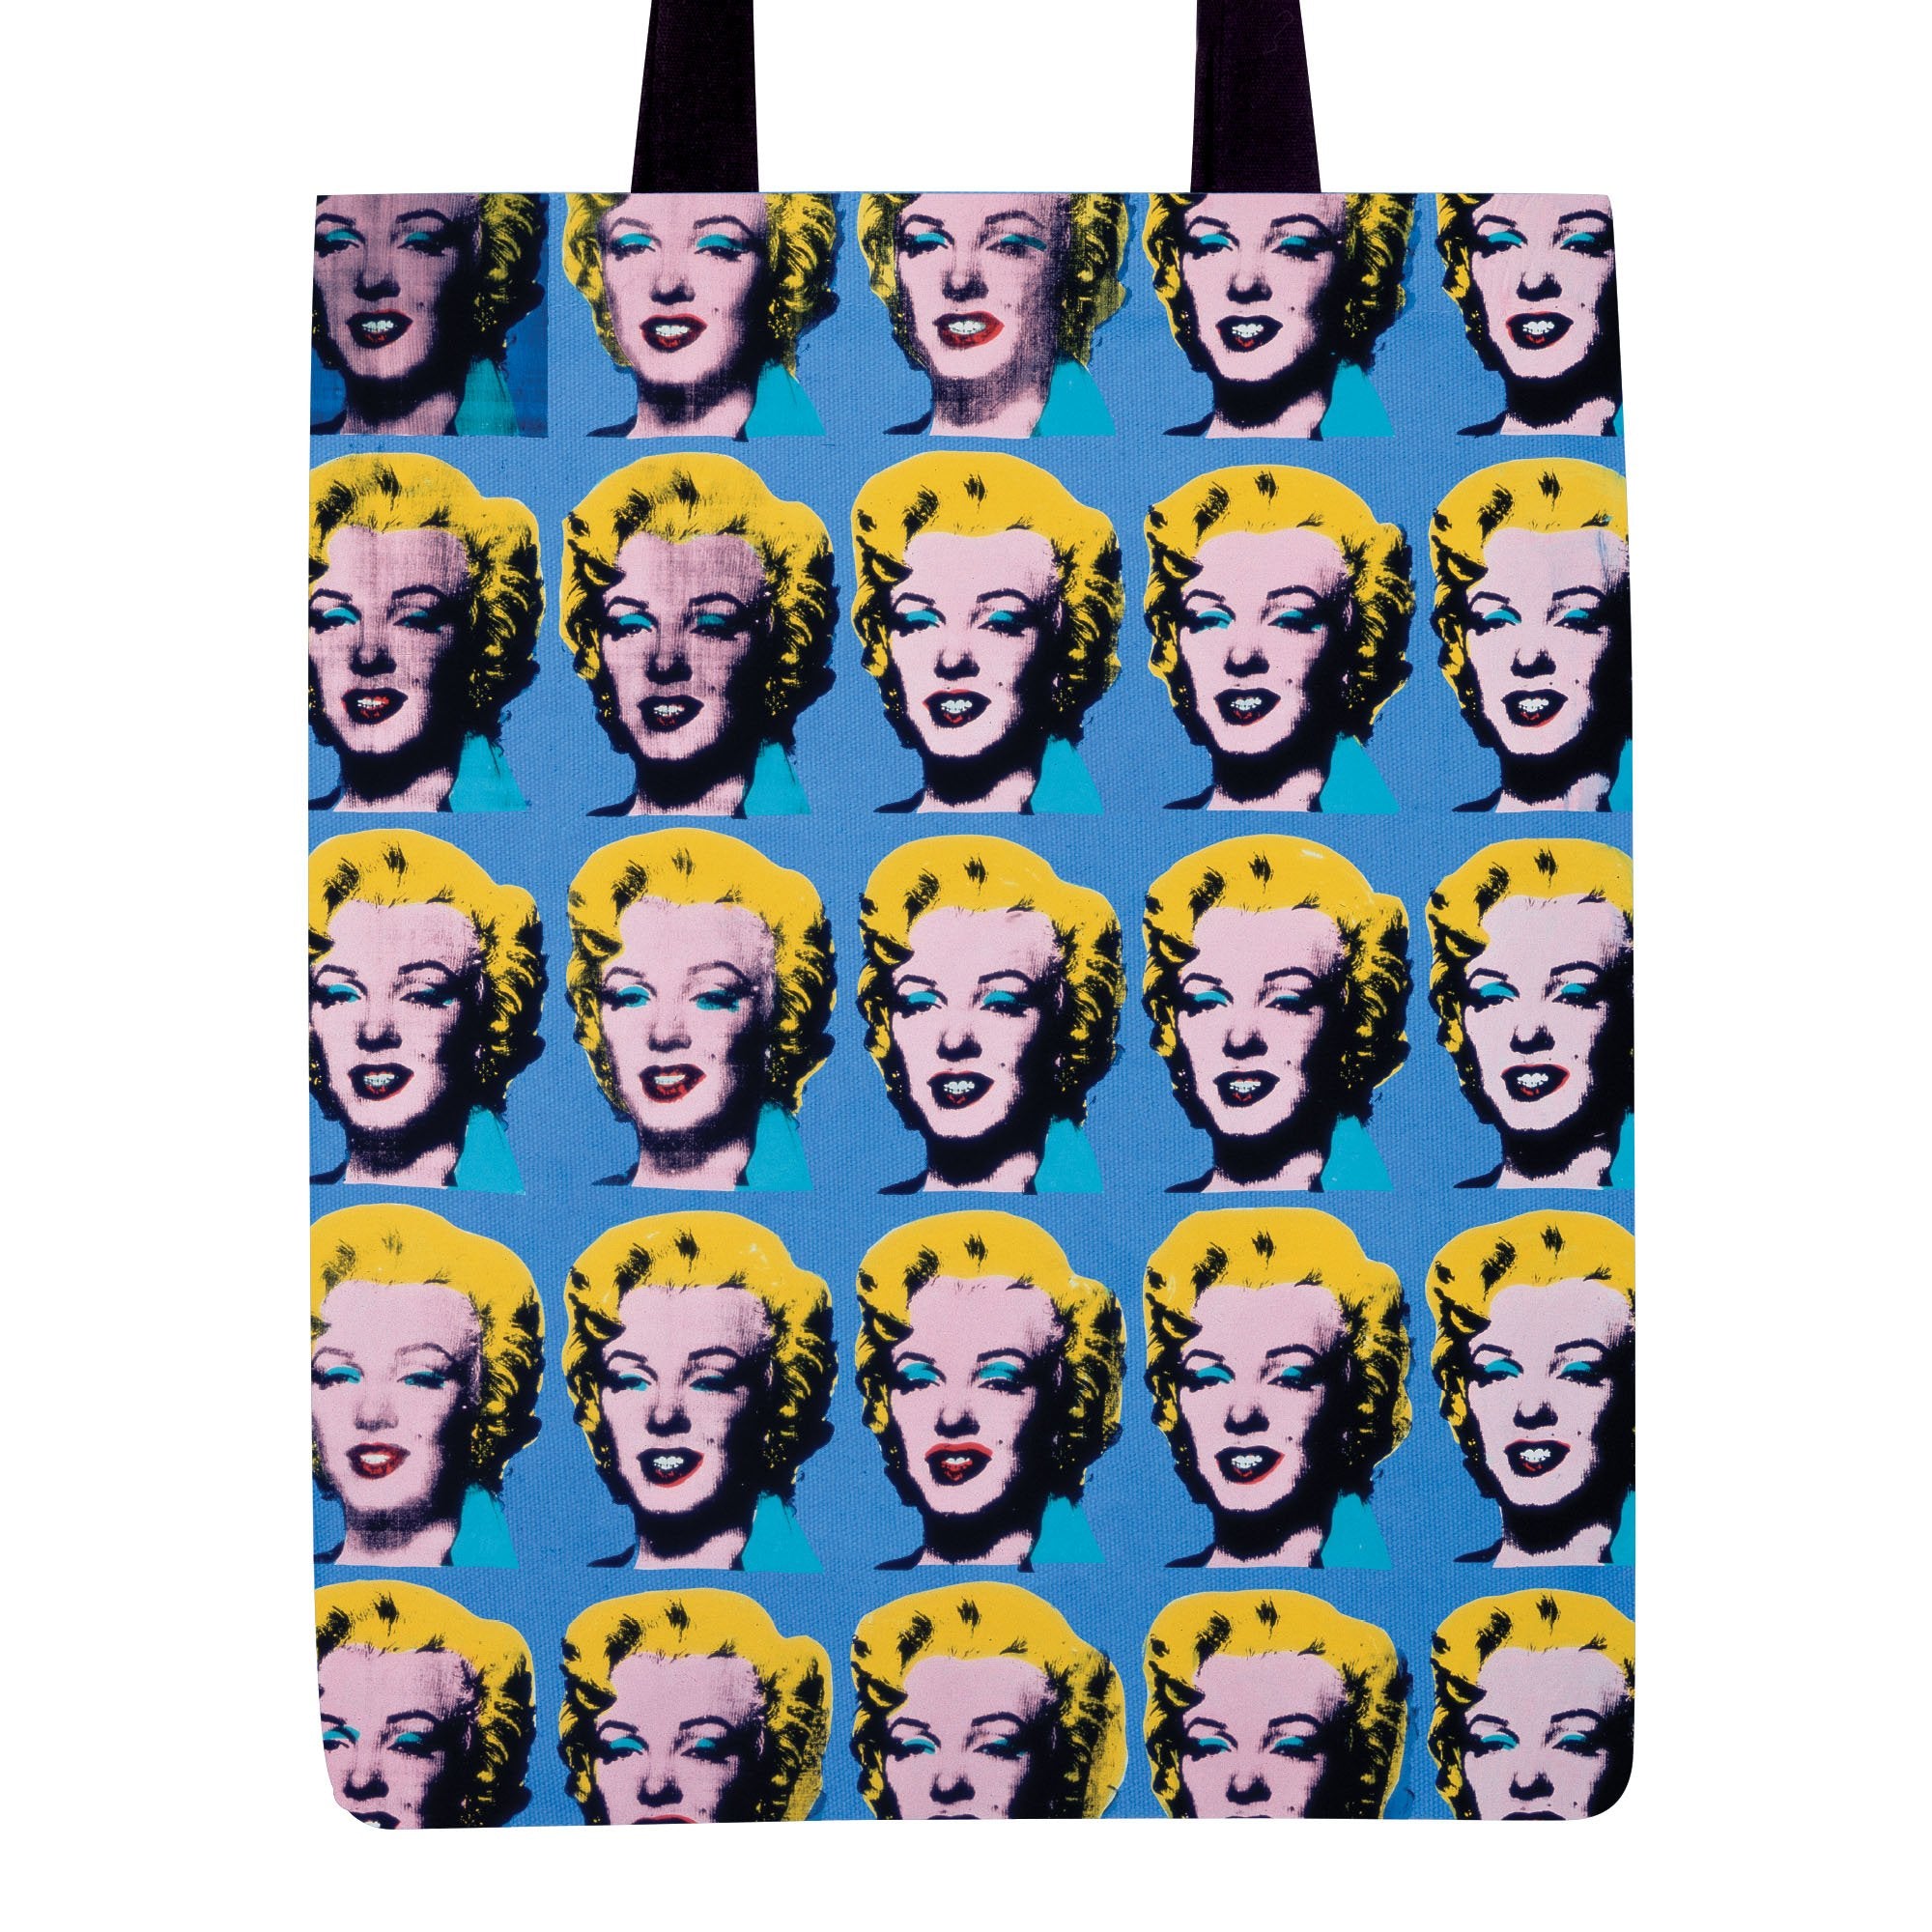 Andy Warhol Marilyn Monroe Canvas Tote Bag